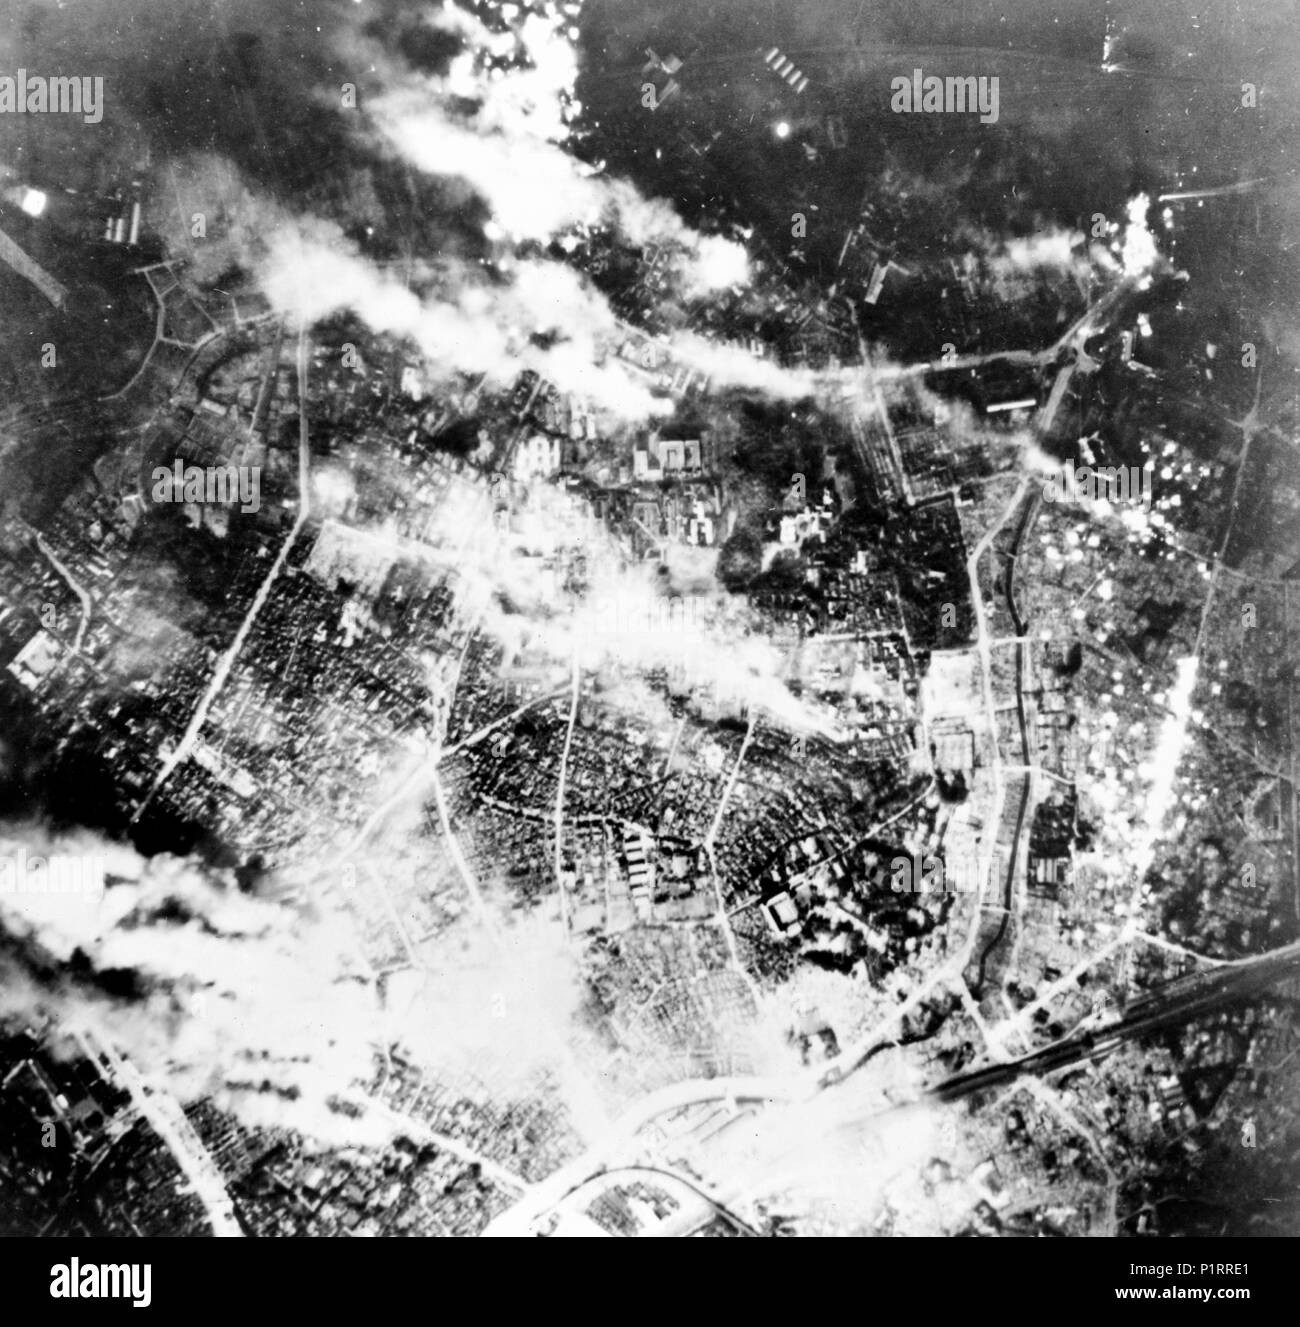 Tokyo burns under B-29 firebomb assault. May 26, 1945. Stock Photo